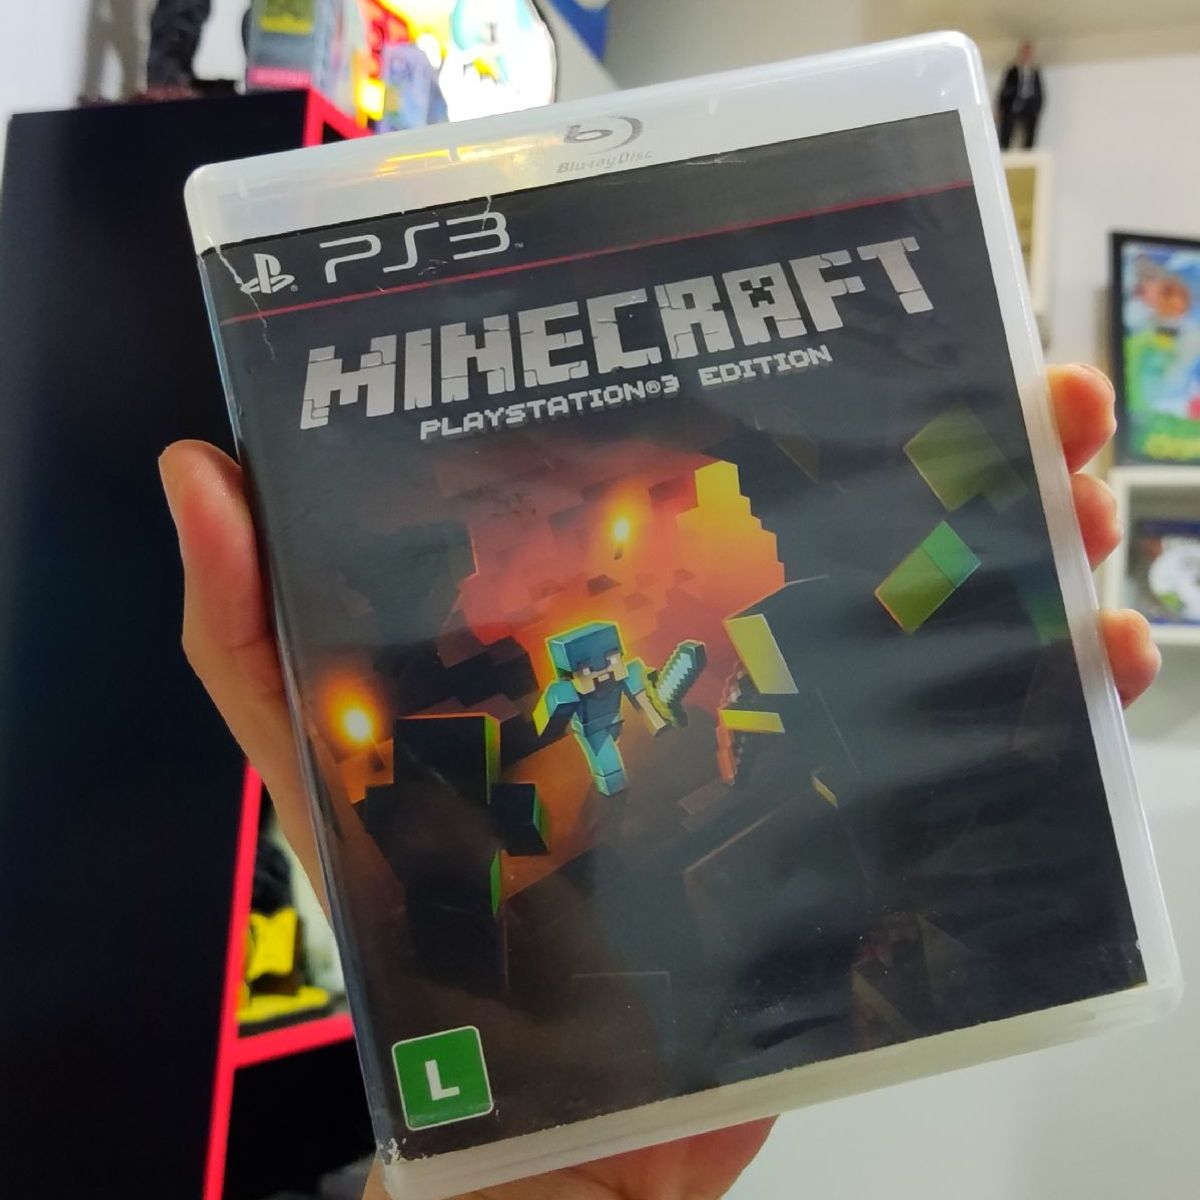 Minecraft Playstation 4 Edition - Ps4 Mídia Física Usado - Mundo